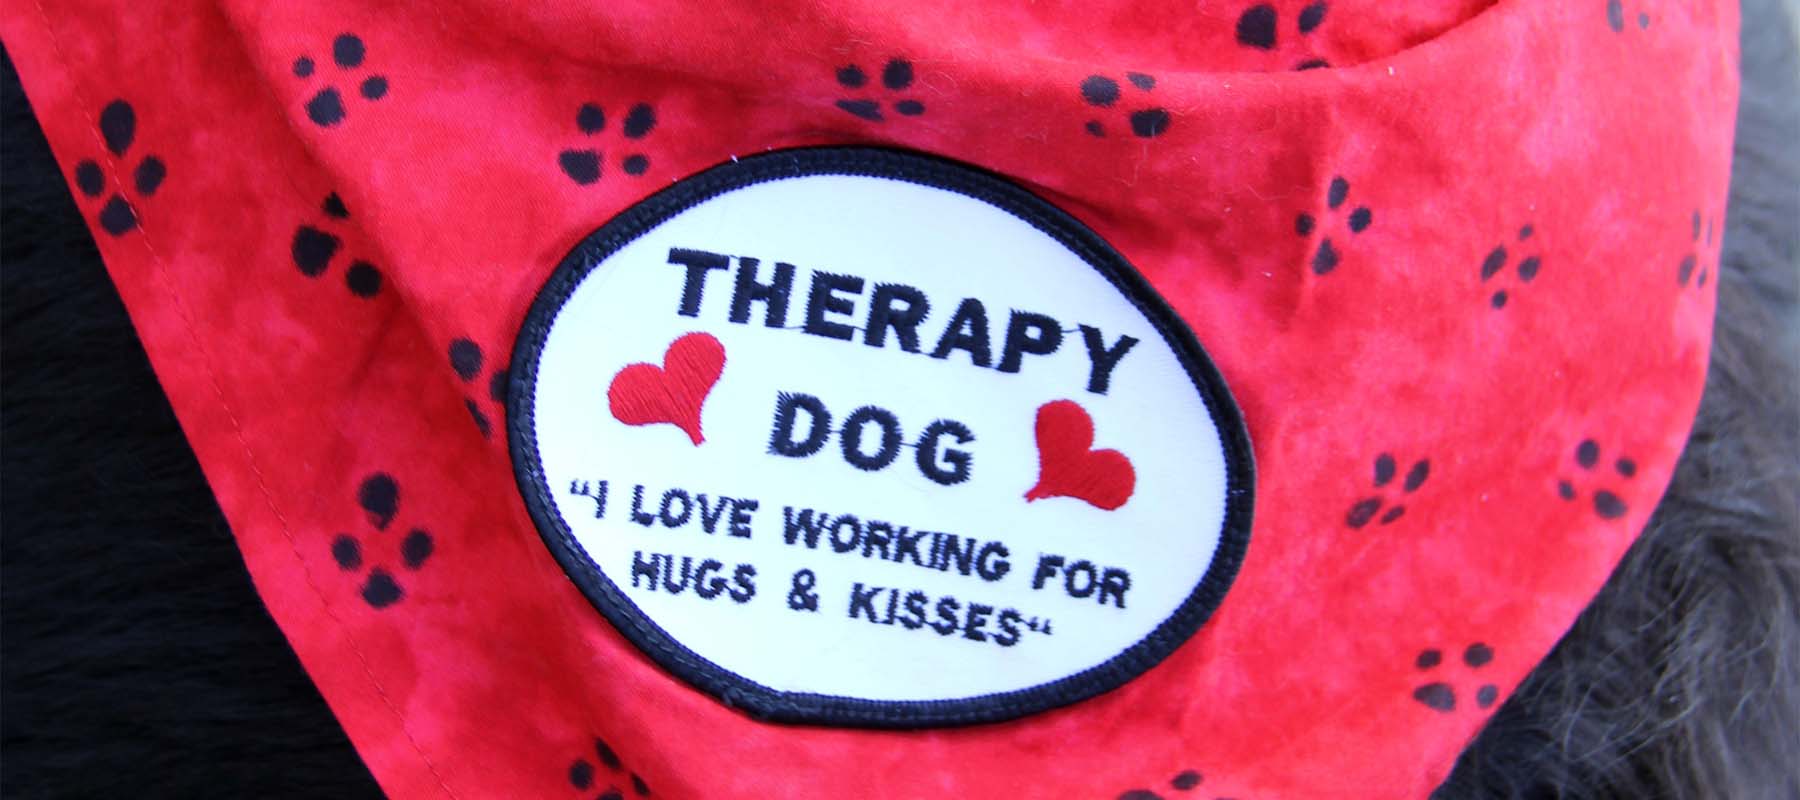 newfoundland_therapy_dog patch